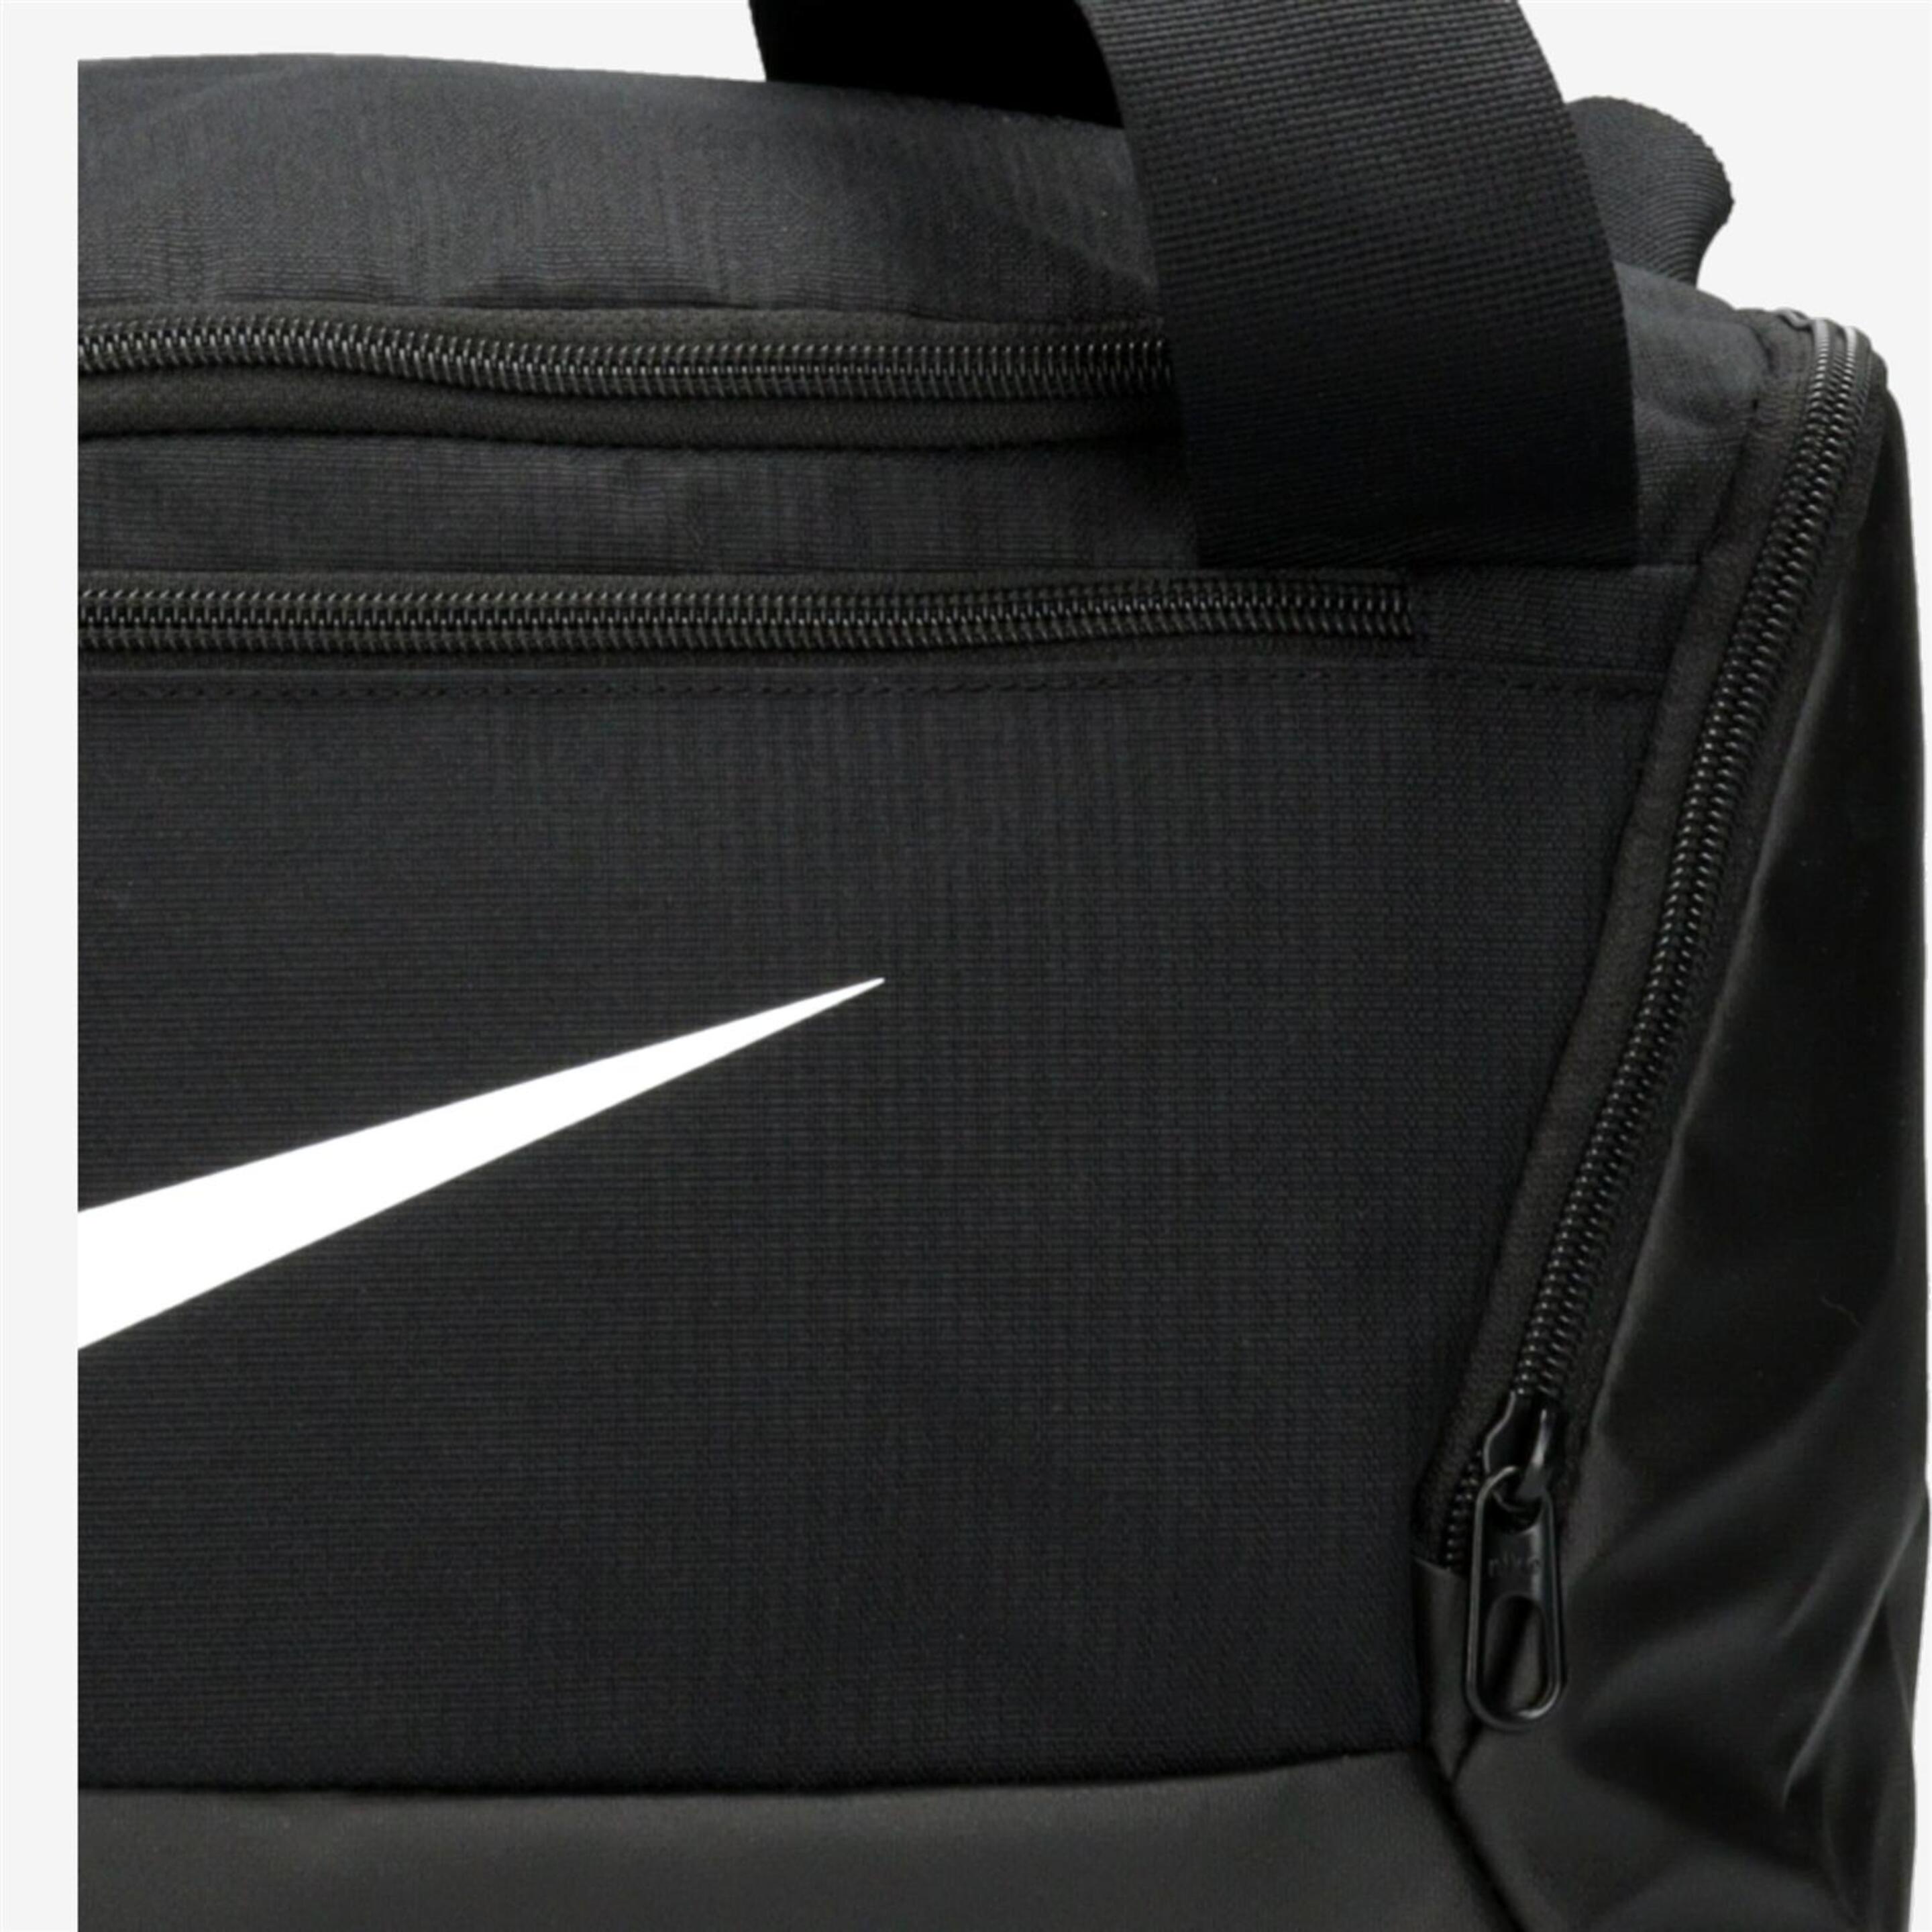 Nike Brasilia